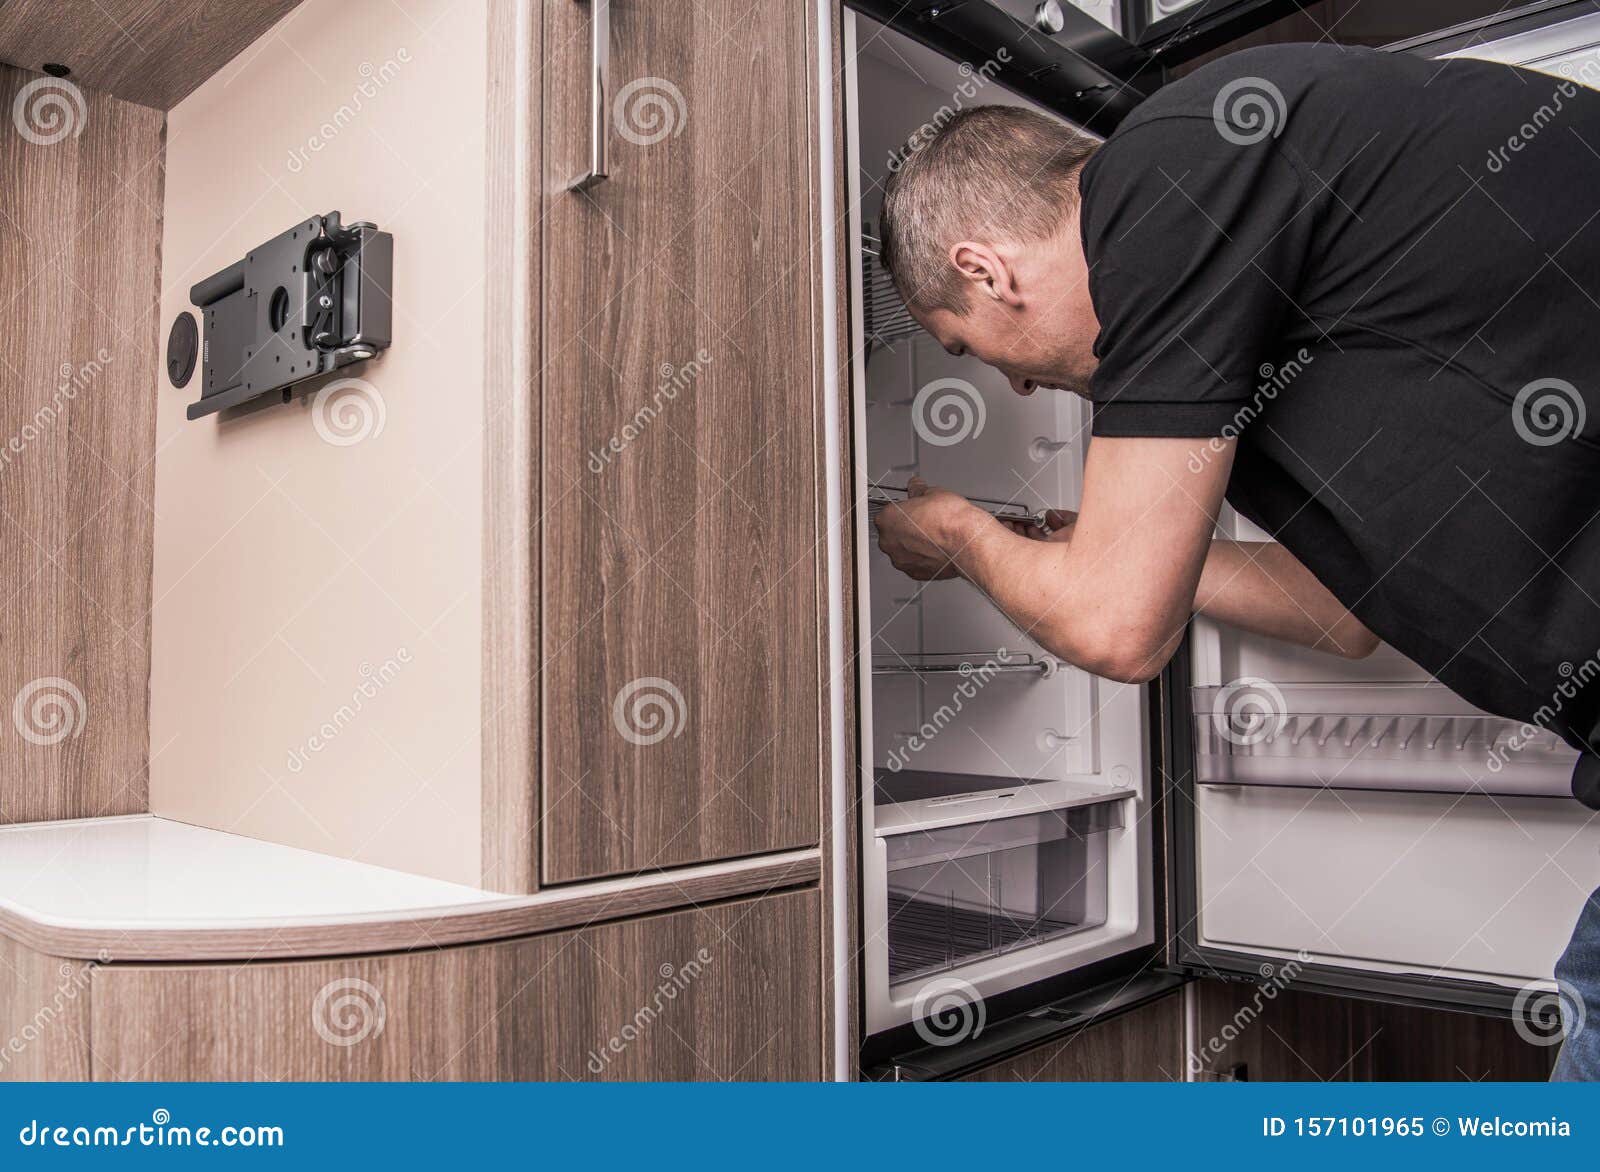 camper refrigerator issue